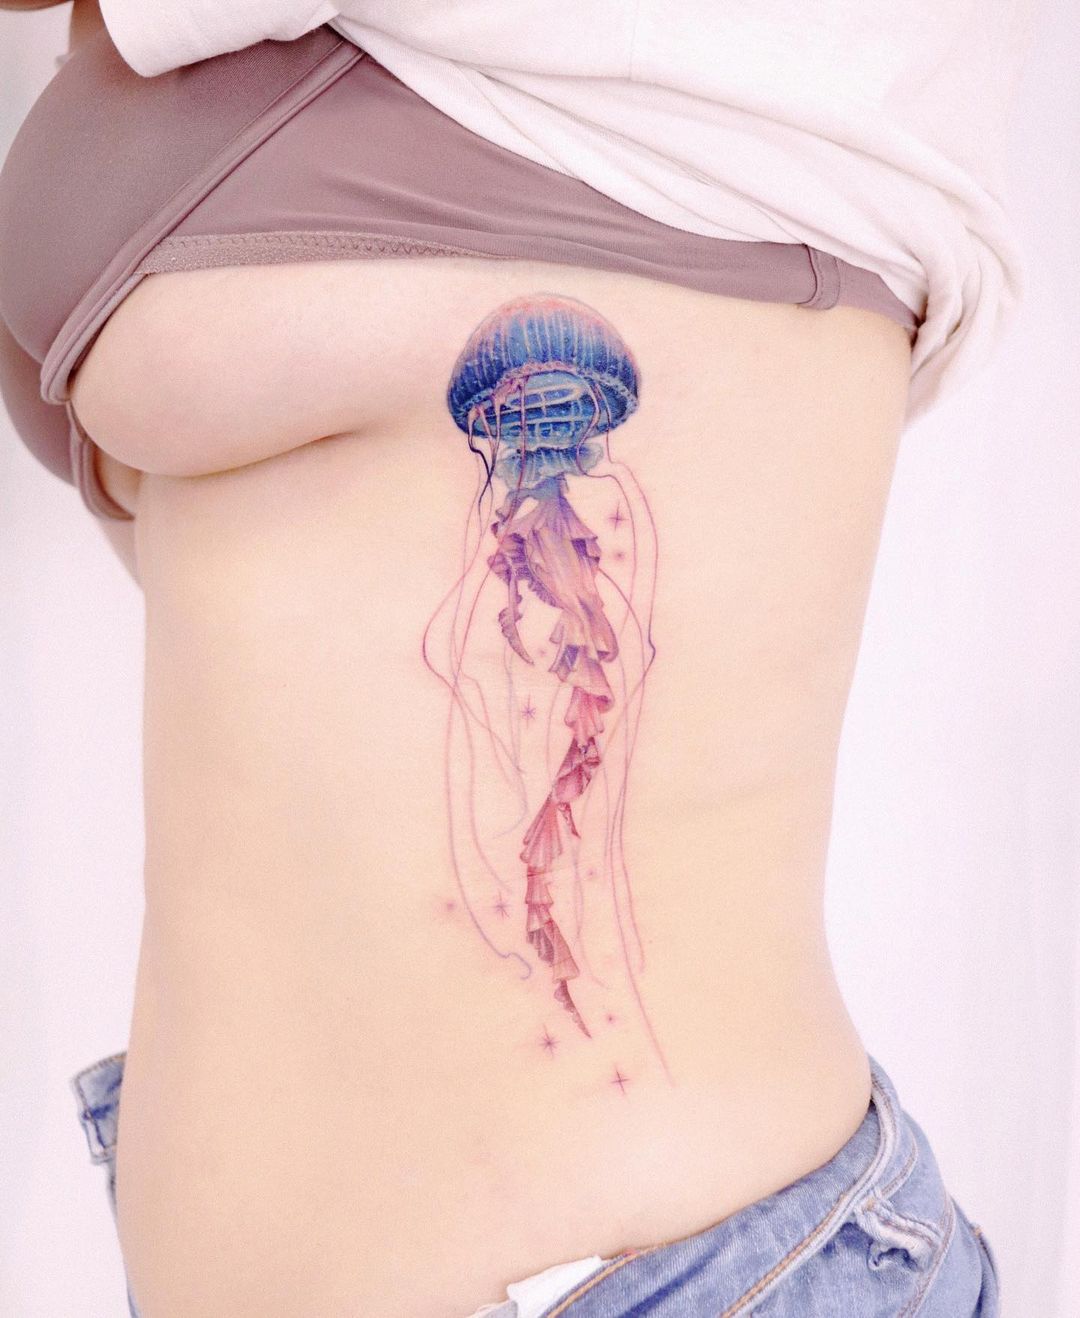 3444 Jellyfish Tattoo Images Stock Photos  Vectors  Shutterstock